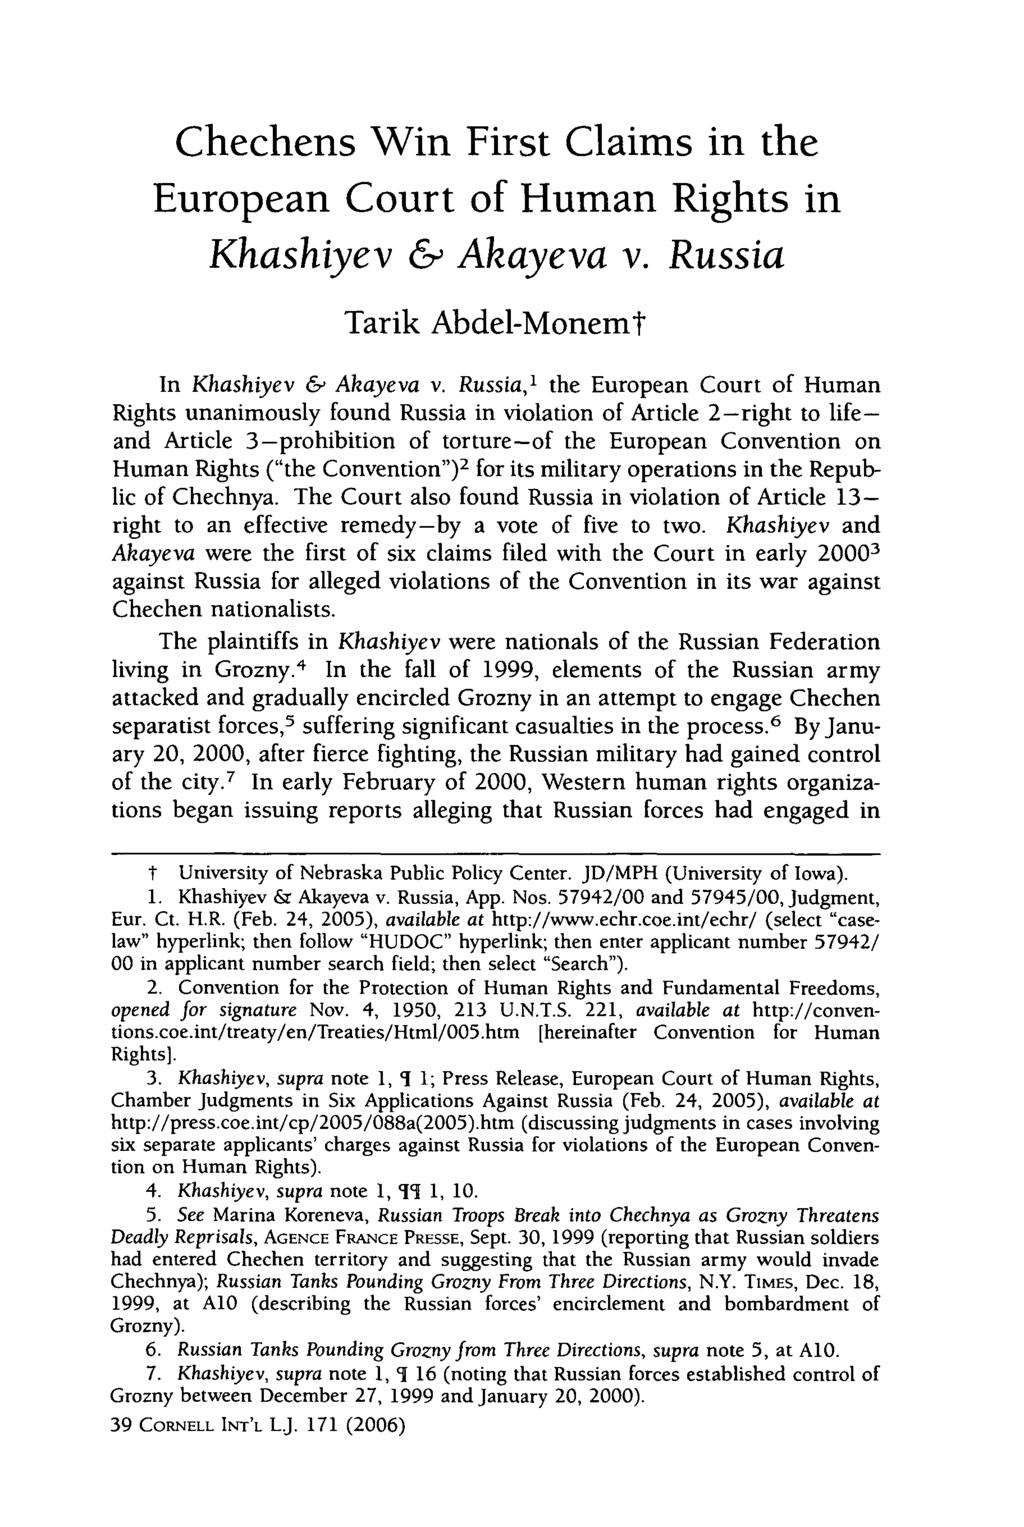 Abdel-Monem in Cornell International Law Journal (2006) 39. Copyright 2006, Cornell University. Used by permission.